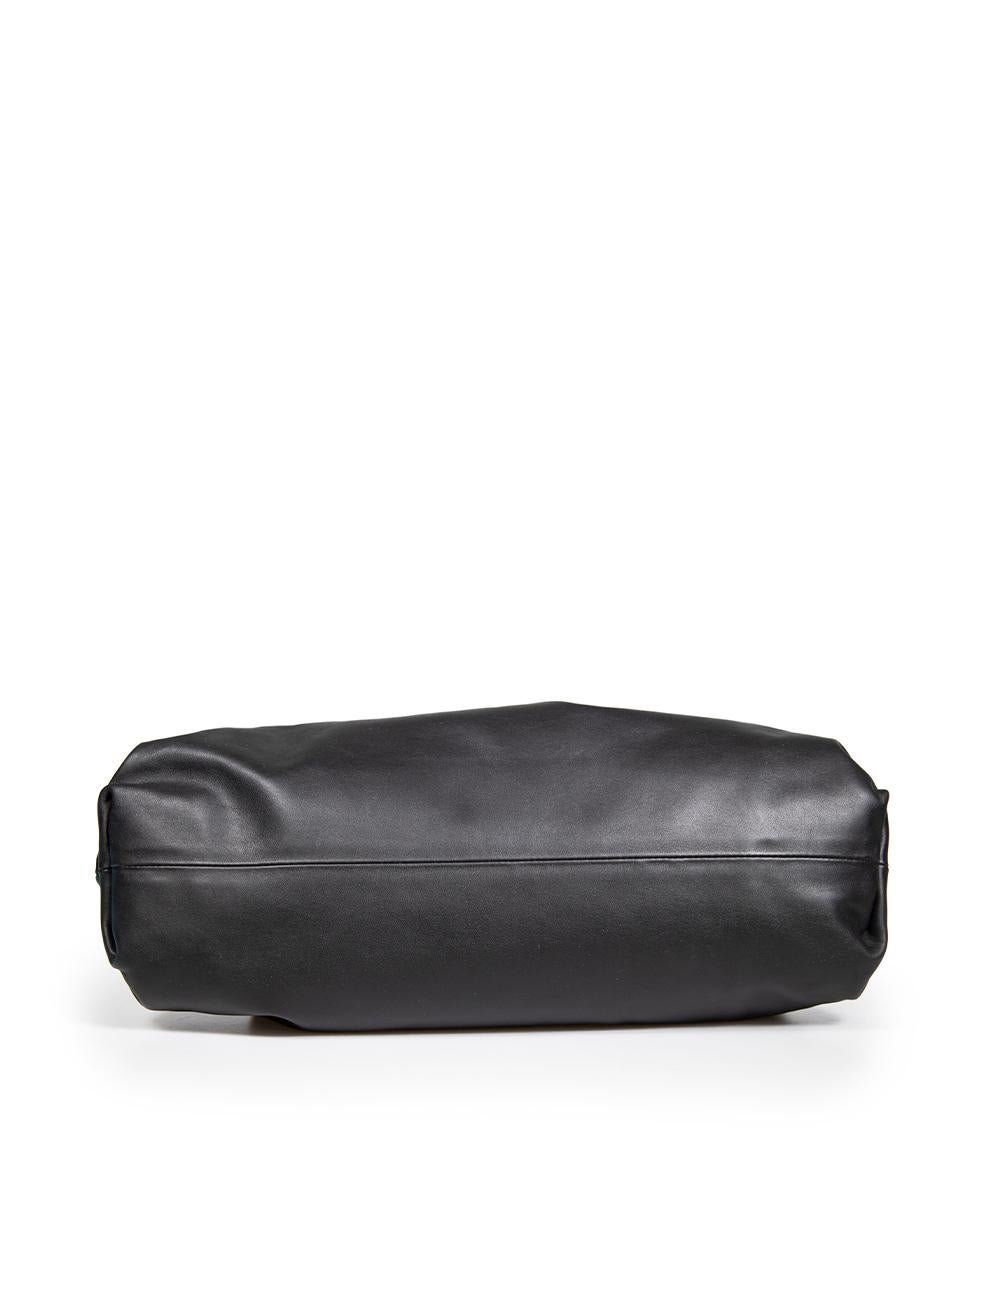 Women's Bottega Veneta Black Leather Large Pouch Clutch For Sale